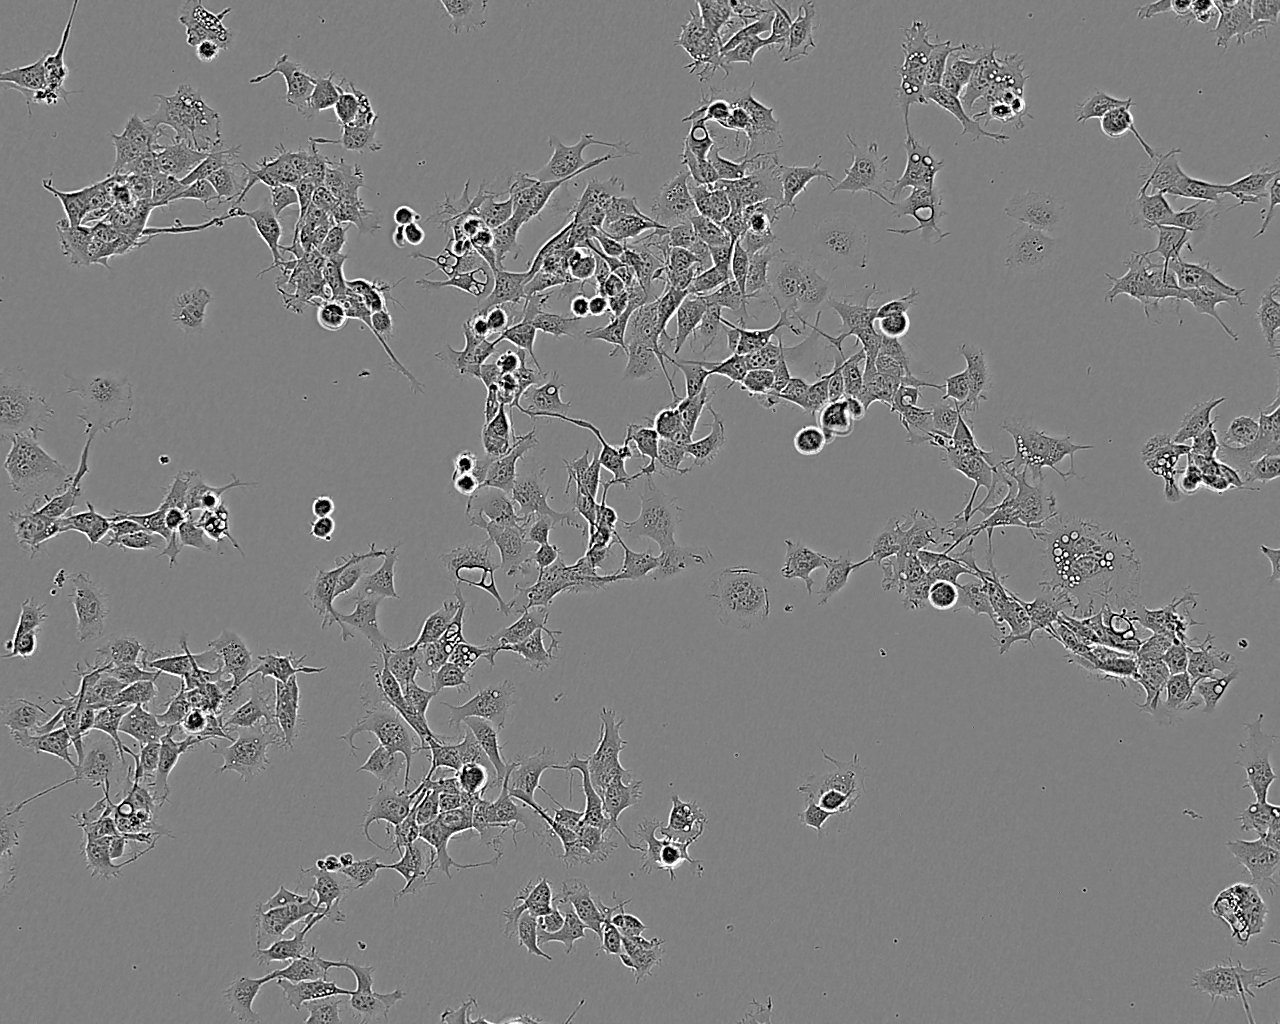 HL-1 epithelioid cells小鼠心房肌细胞系,HL-1 epithelioid cells